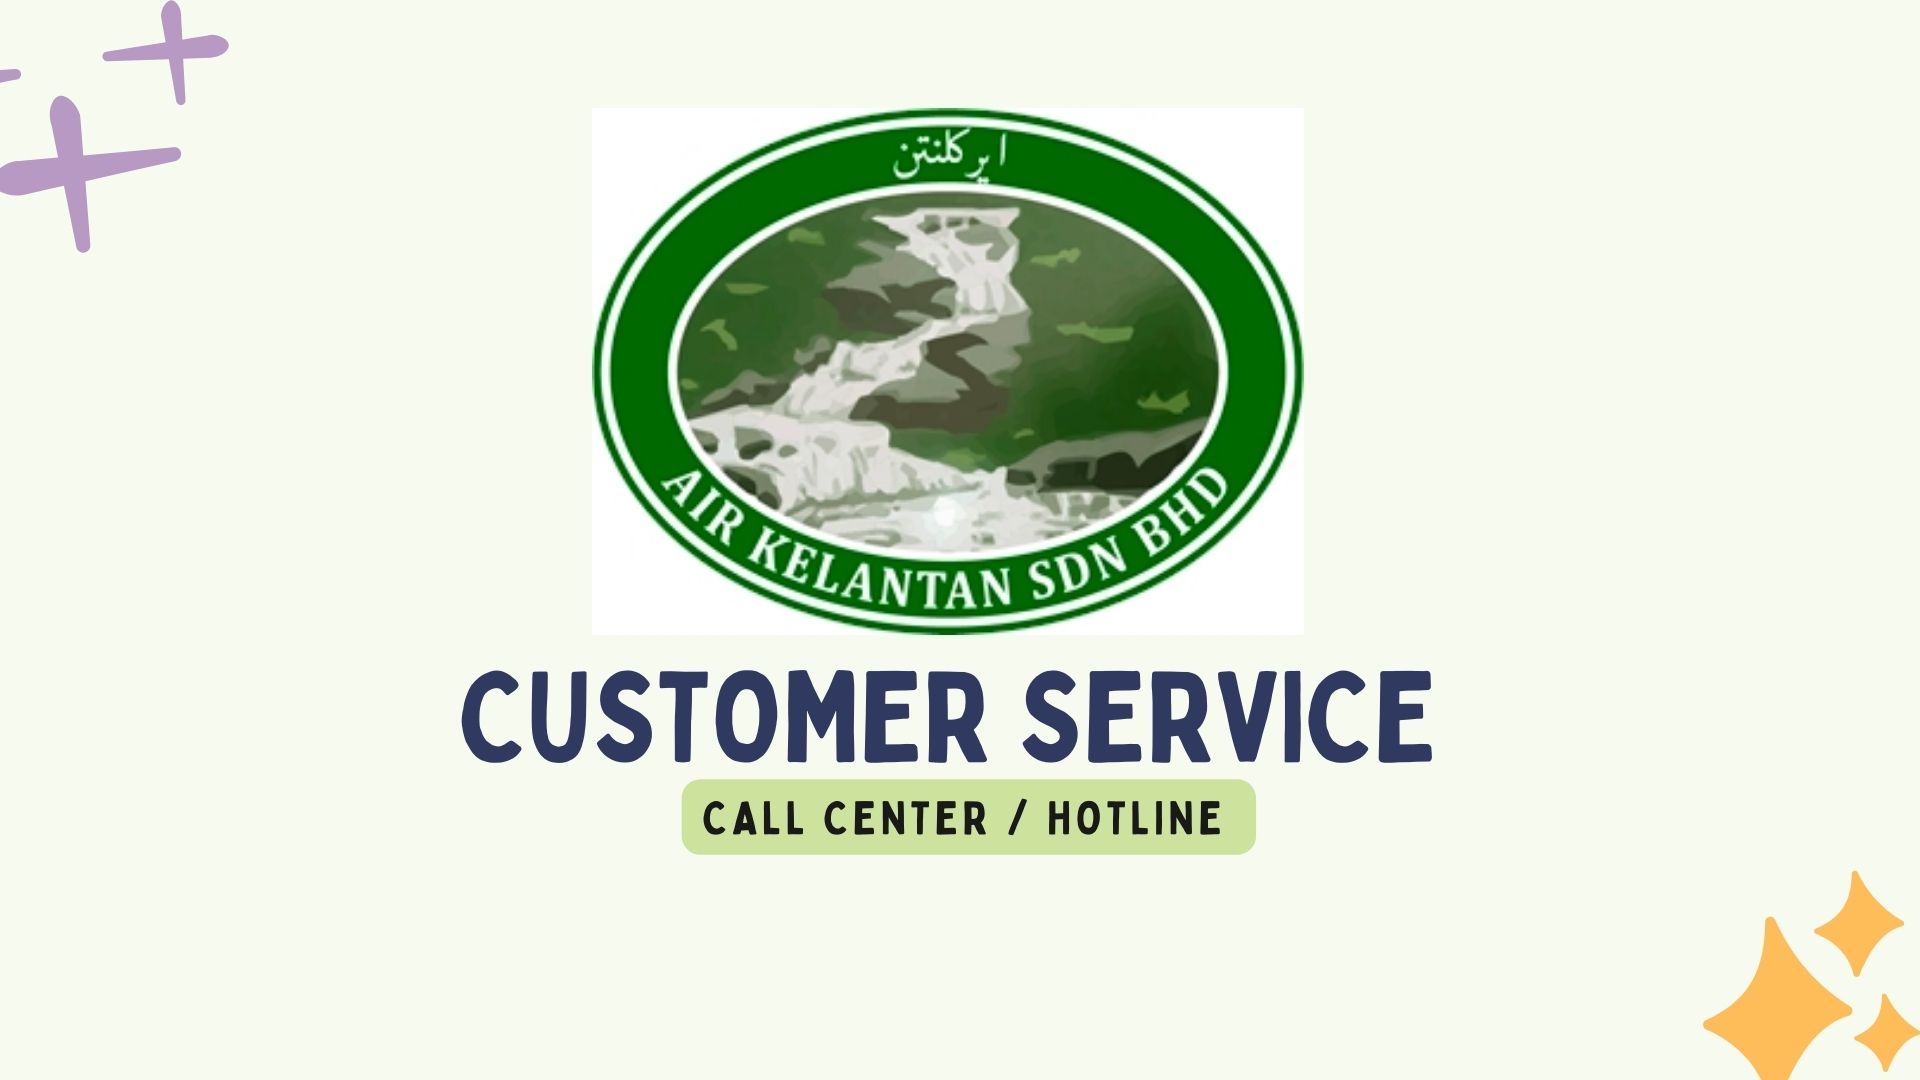 Air Kelantan Sdn Bhd Customer Service